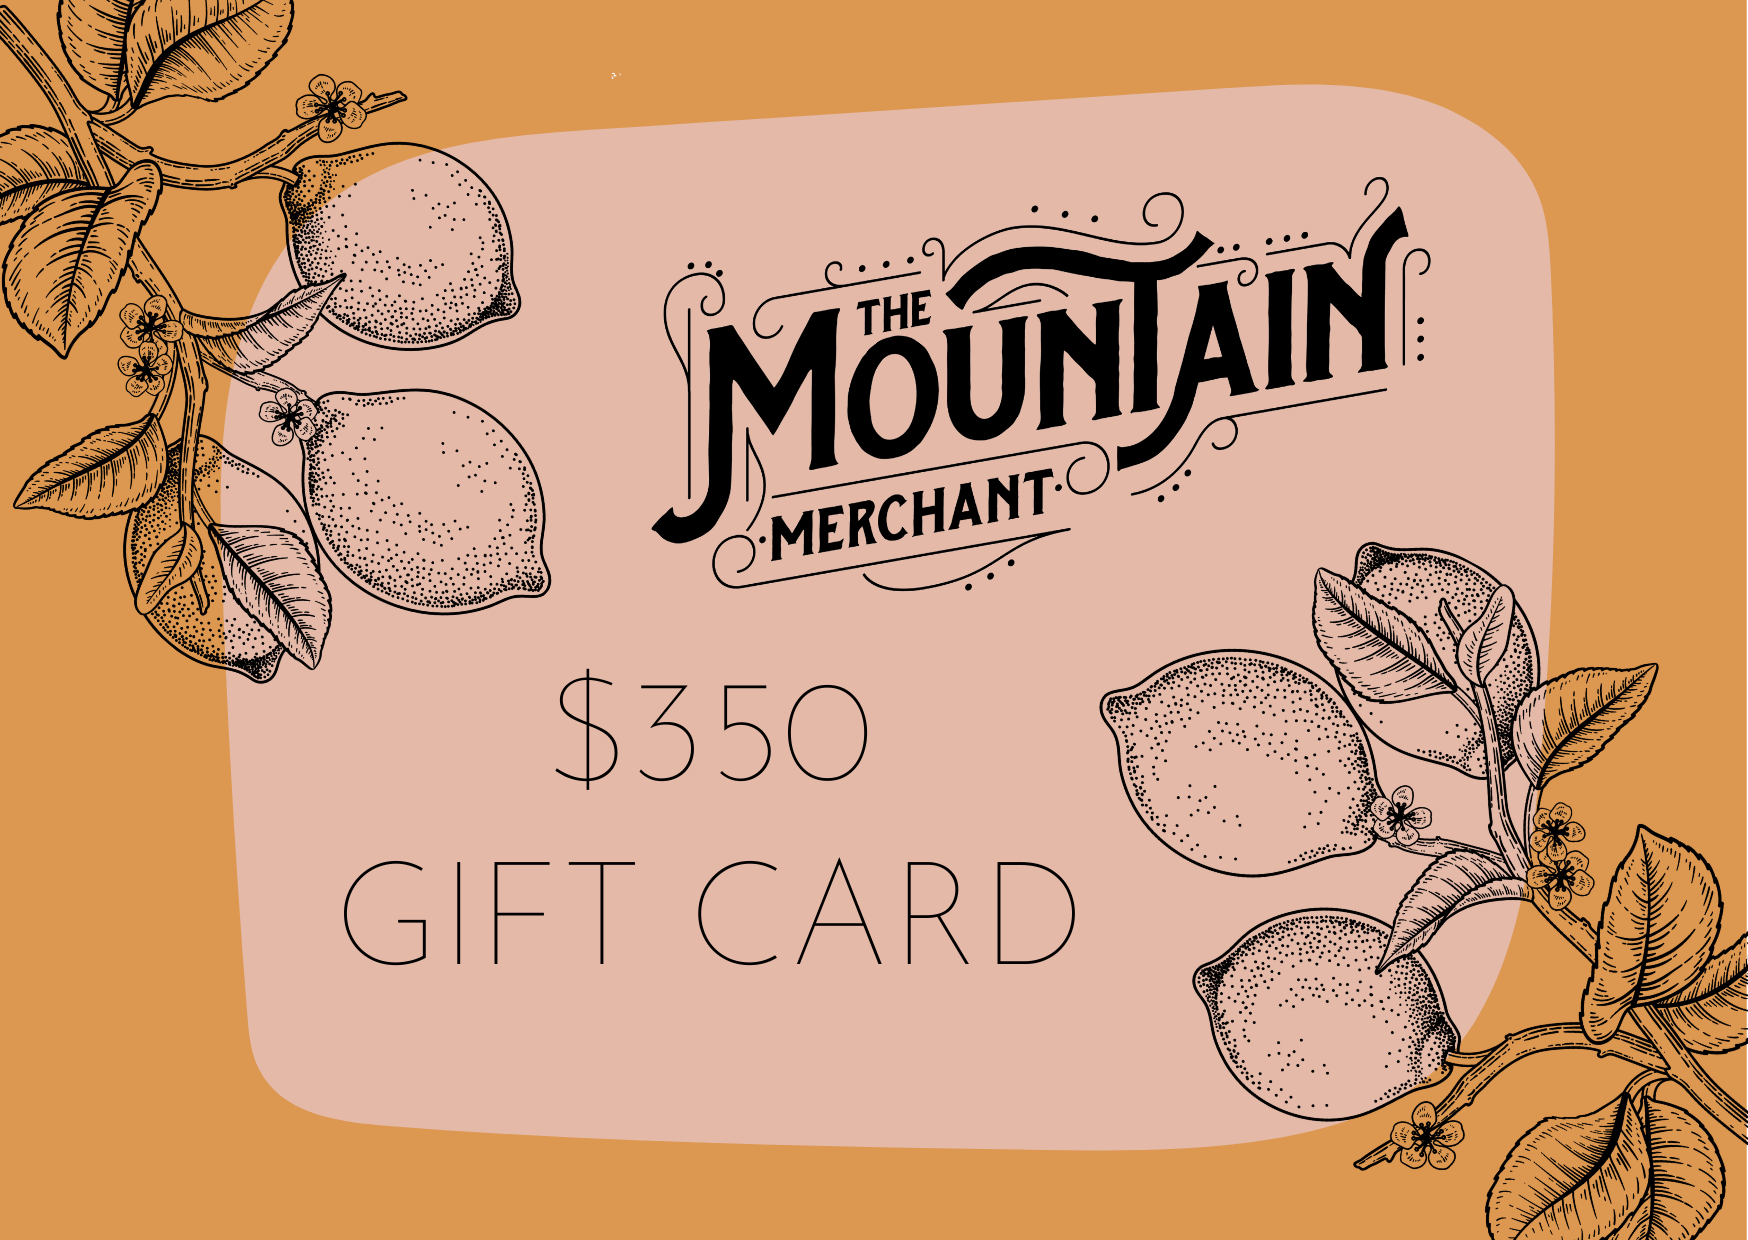 The Mountain Merchant - Gift Card $350 -The Mountain Merchant -The Mountain Merchant